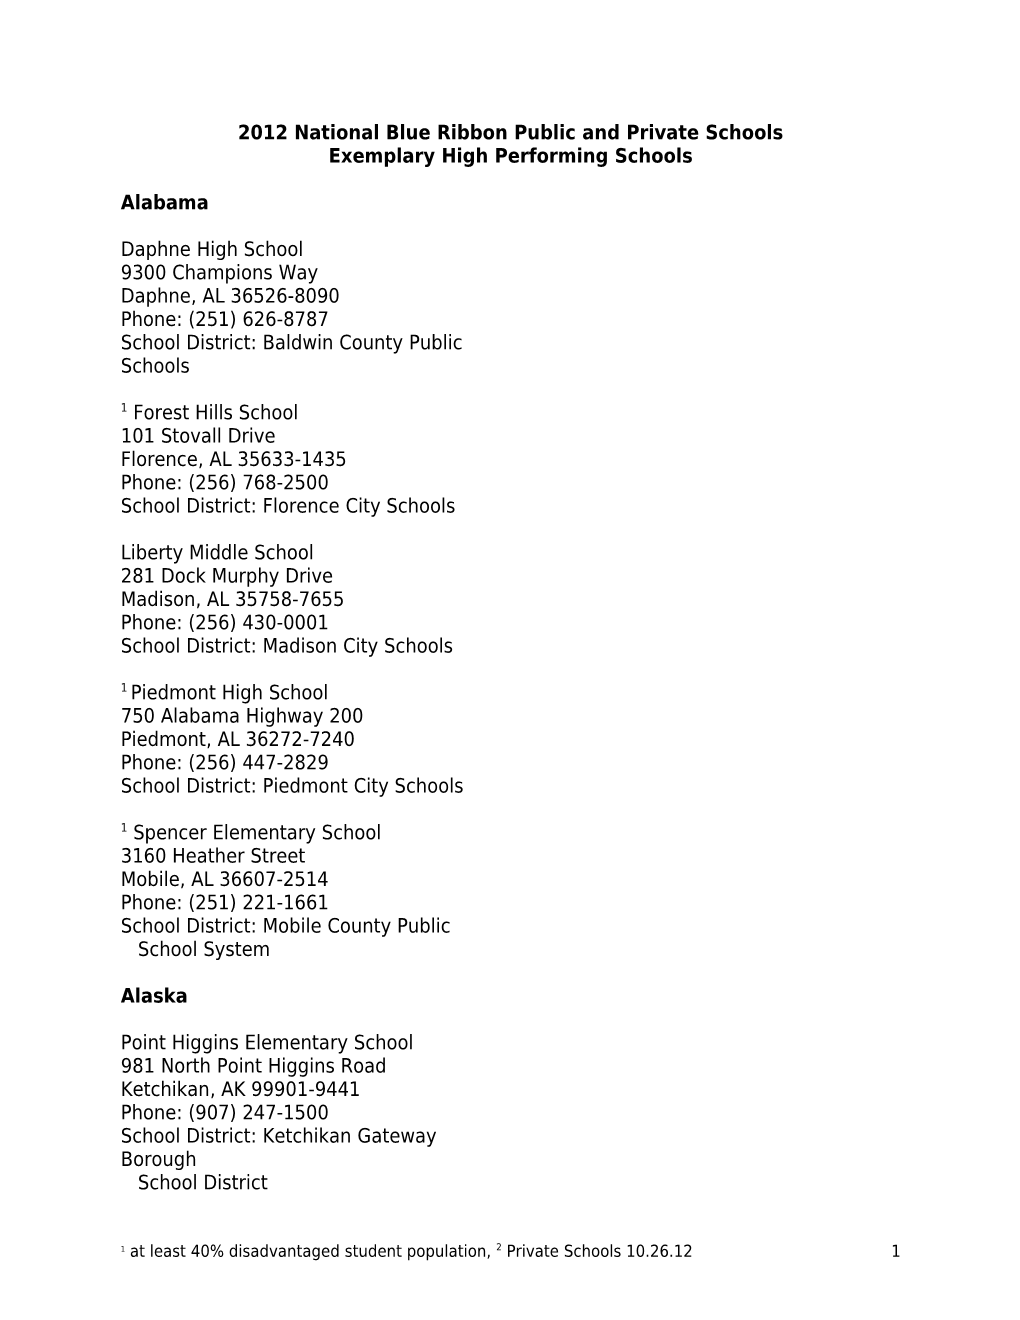 Exemplary High Performing Schools: 2012 National Blue Ribbon Schools September 27, 2012